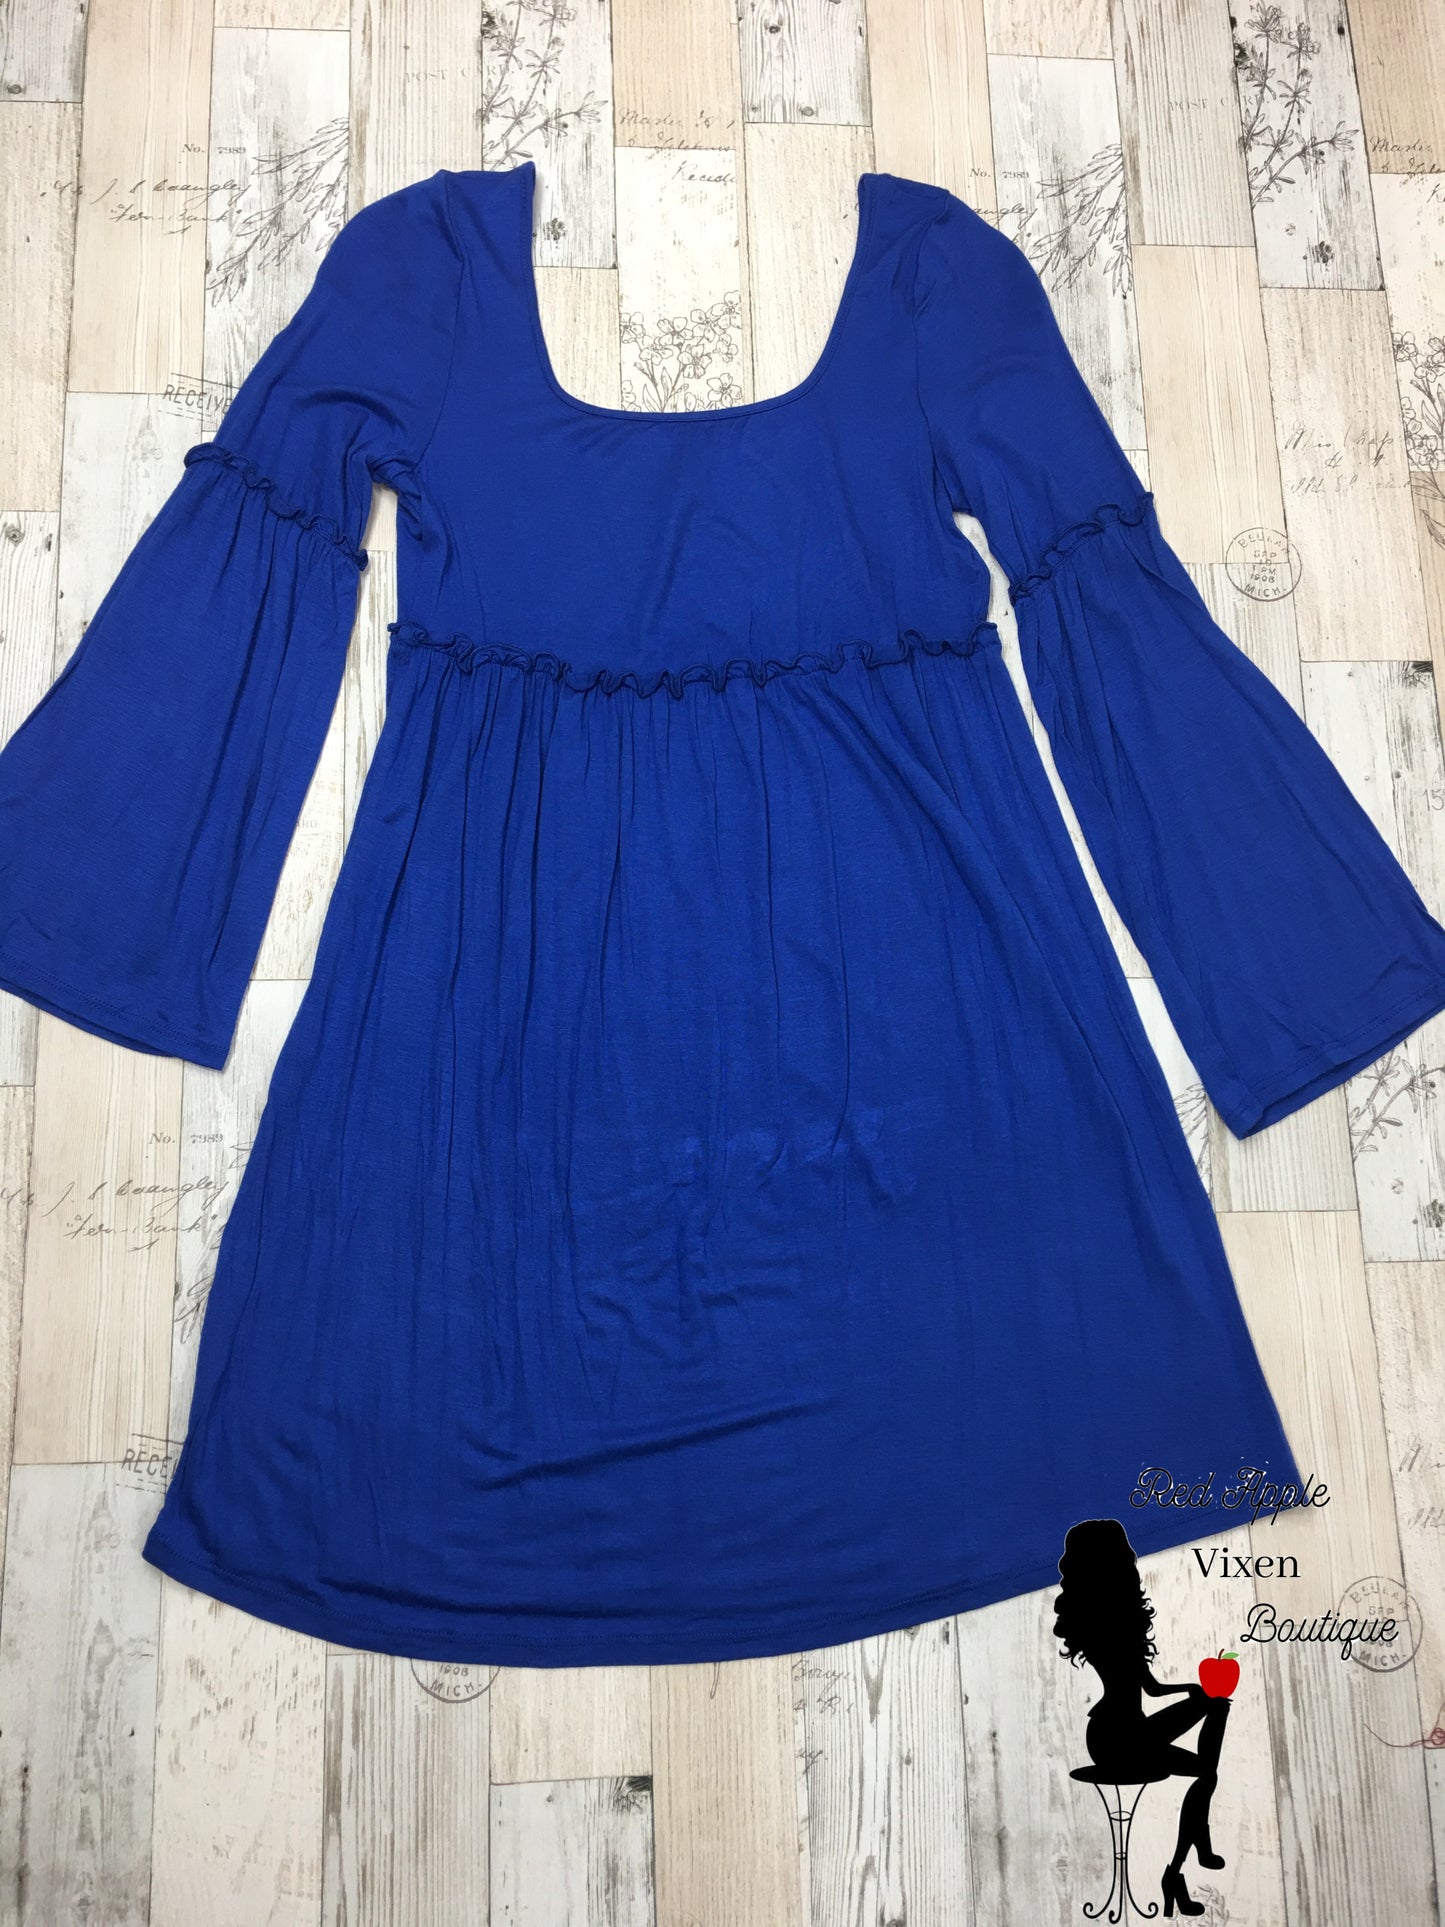 Solid Blue Bell Sleeve Dress - Red Apple Vixen Boutique